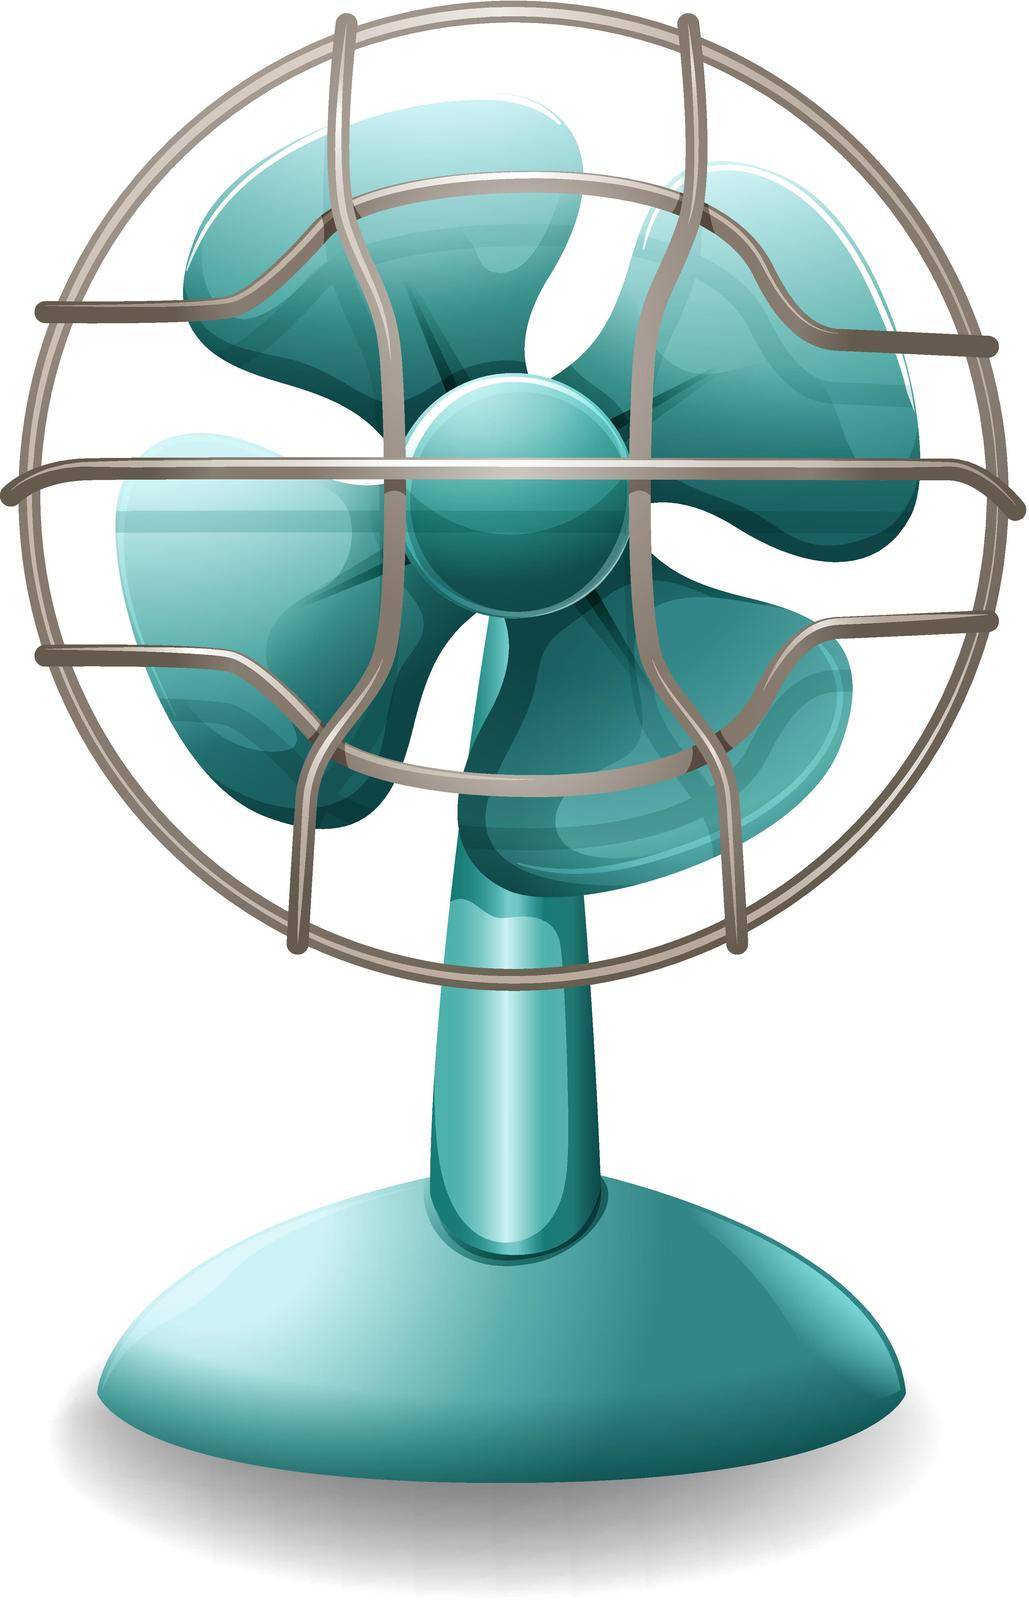 Close up plain design of electric fan